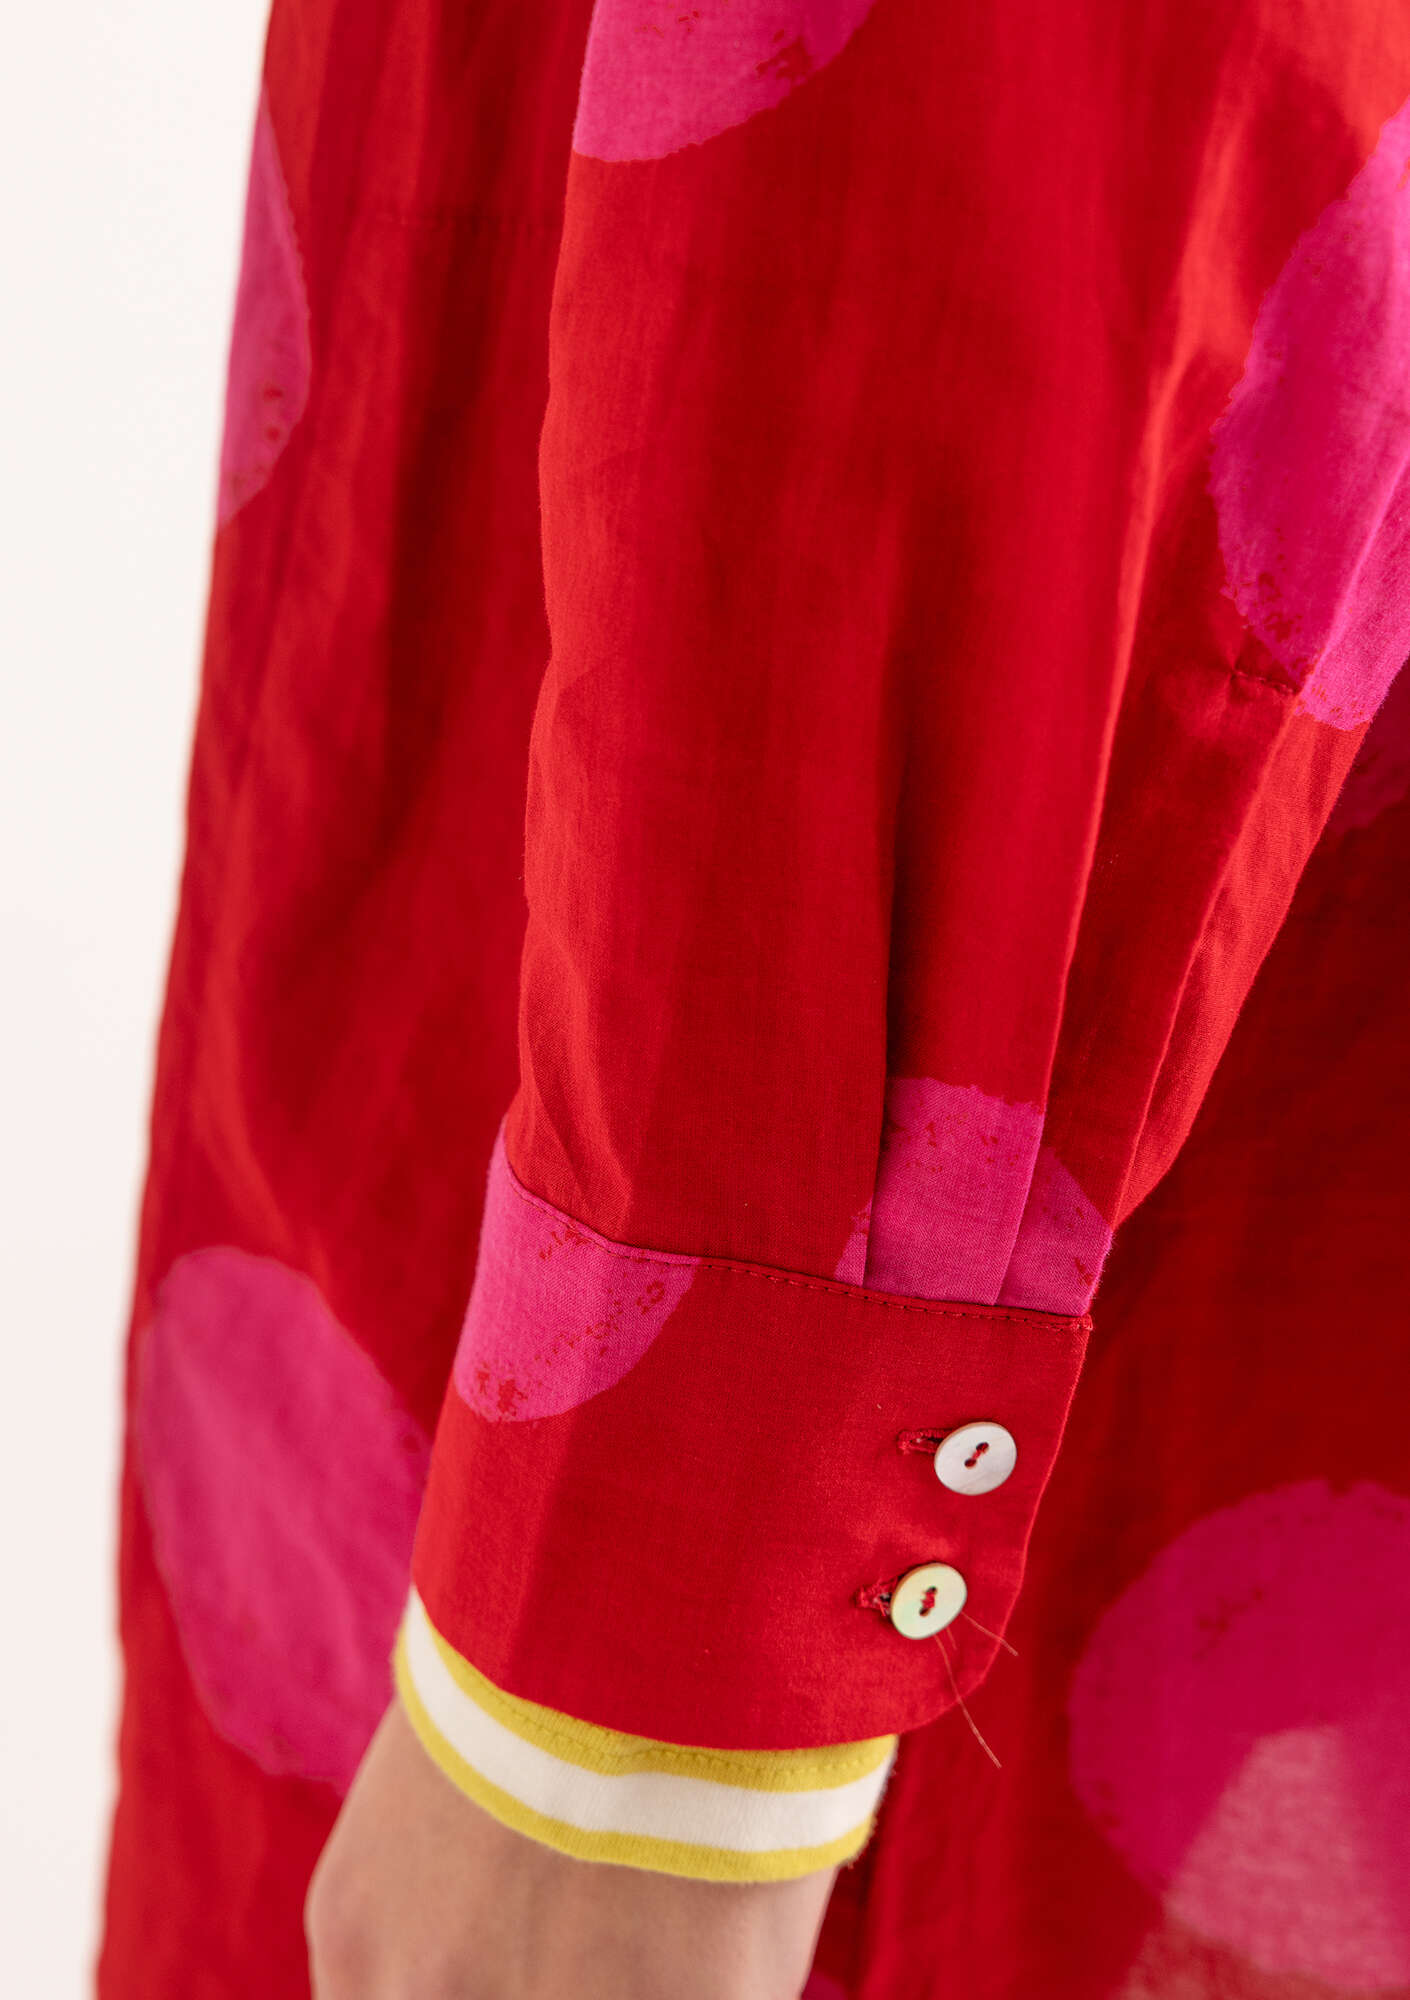 “Palette” organic cotton shirt dress parrot red/patterned